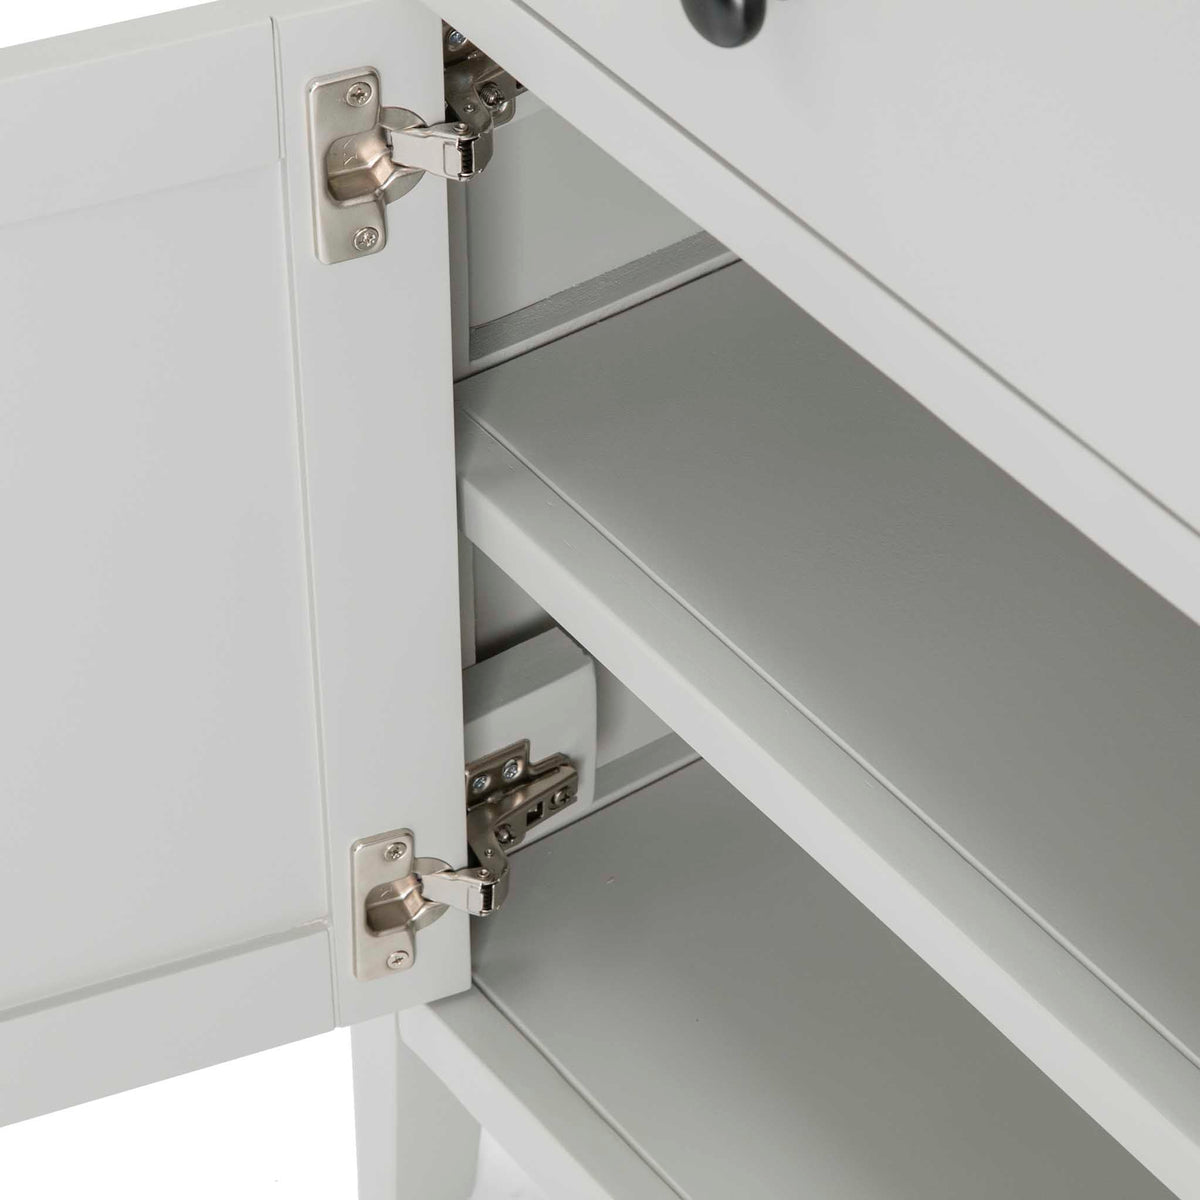 Elgin Grey Small Sideboard - Looking down inside cupboard